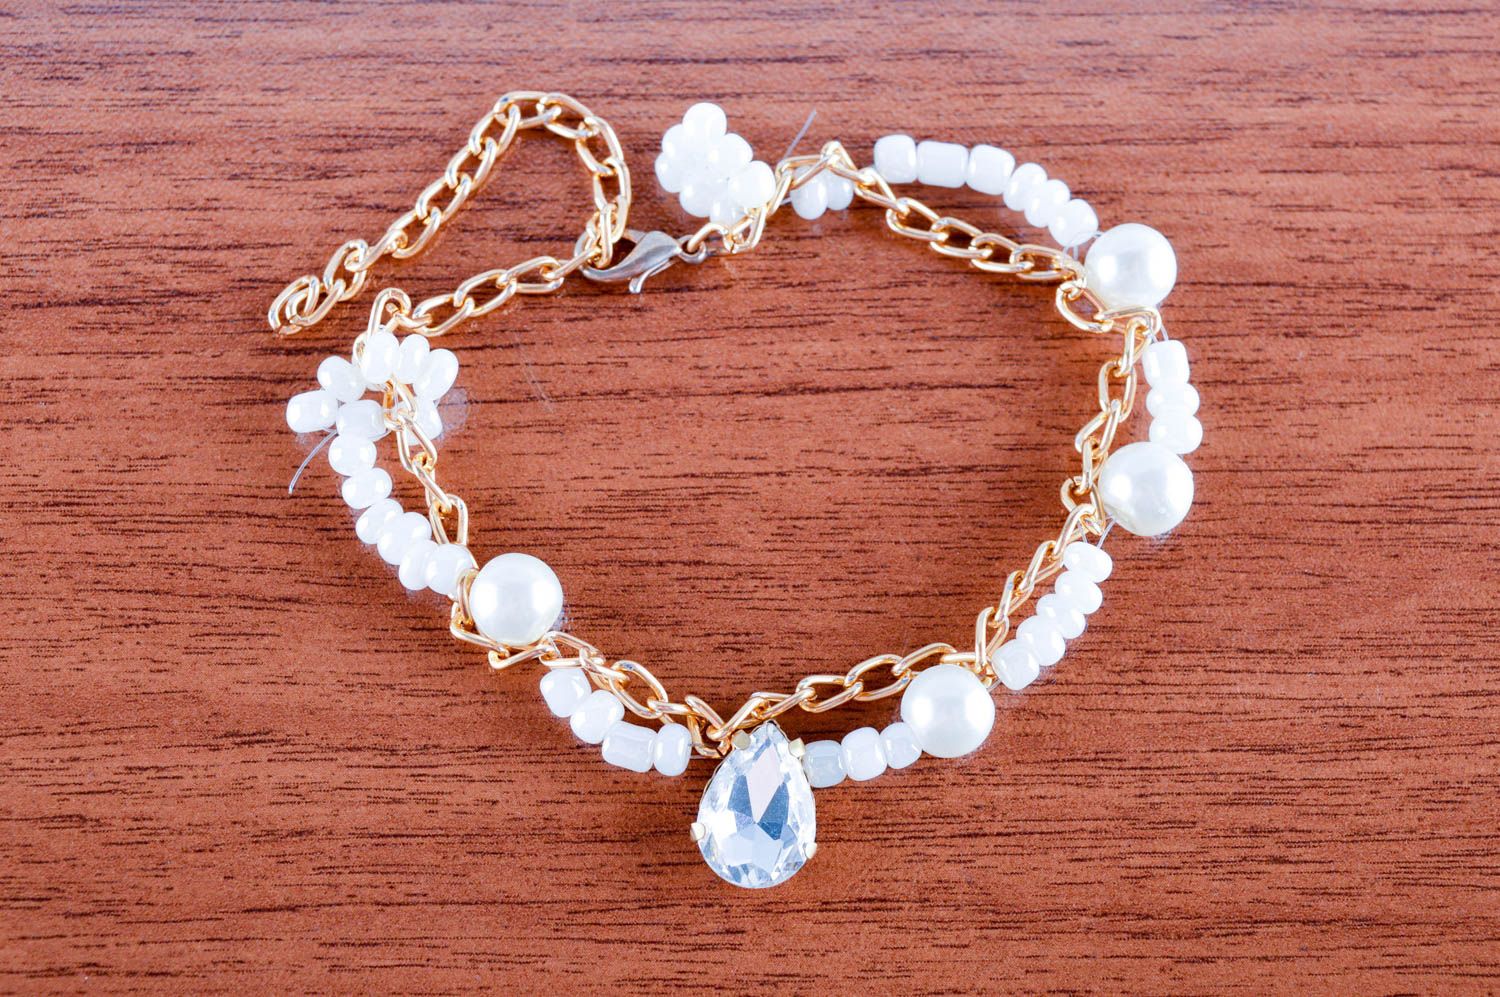 Handmade bracelet designer bracelet beads accessory unusual gift beaded jewelry photo 1